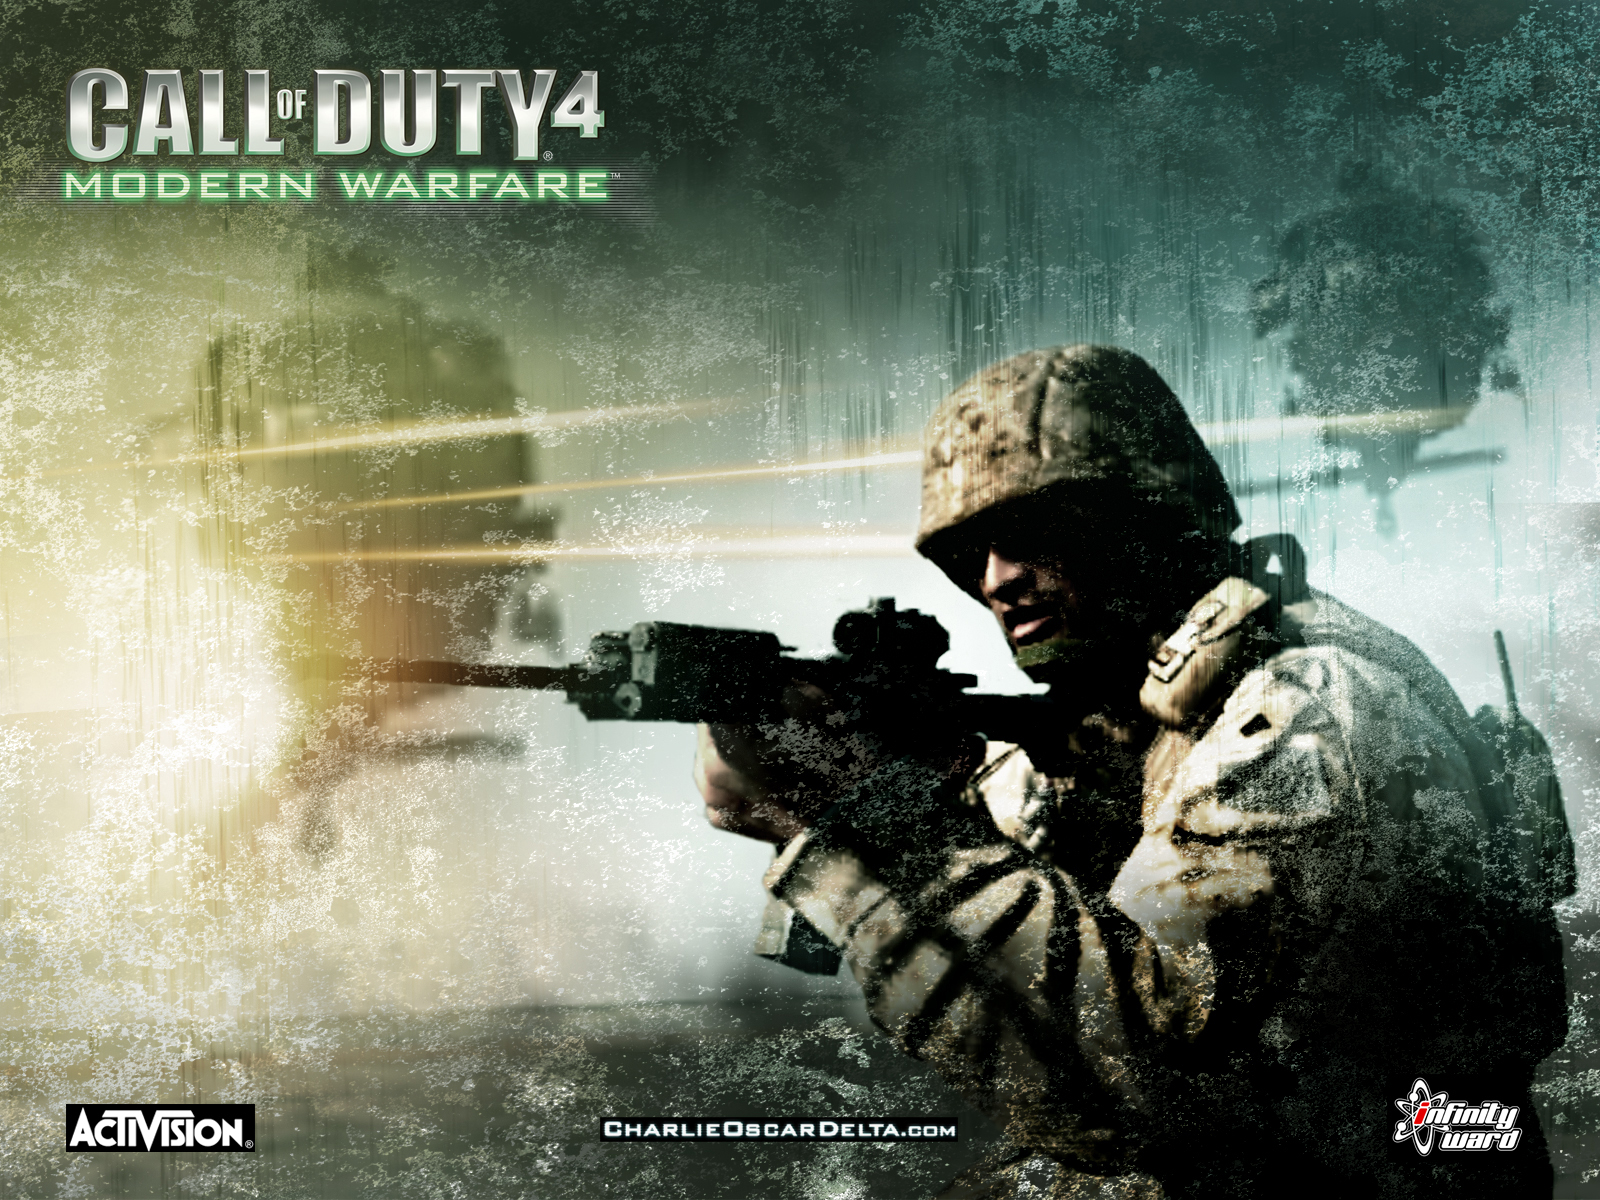 1521063 descargar imagen videojuego, call of duty 4: modern warfare, call of duty: fondos de pantalla y protectores de pantalla gratis